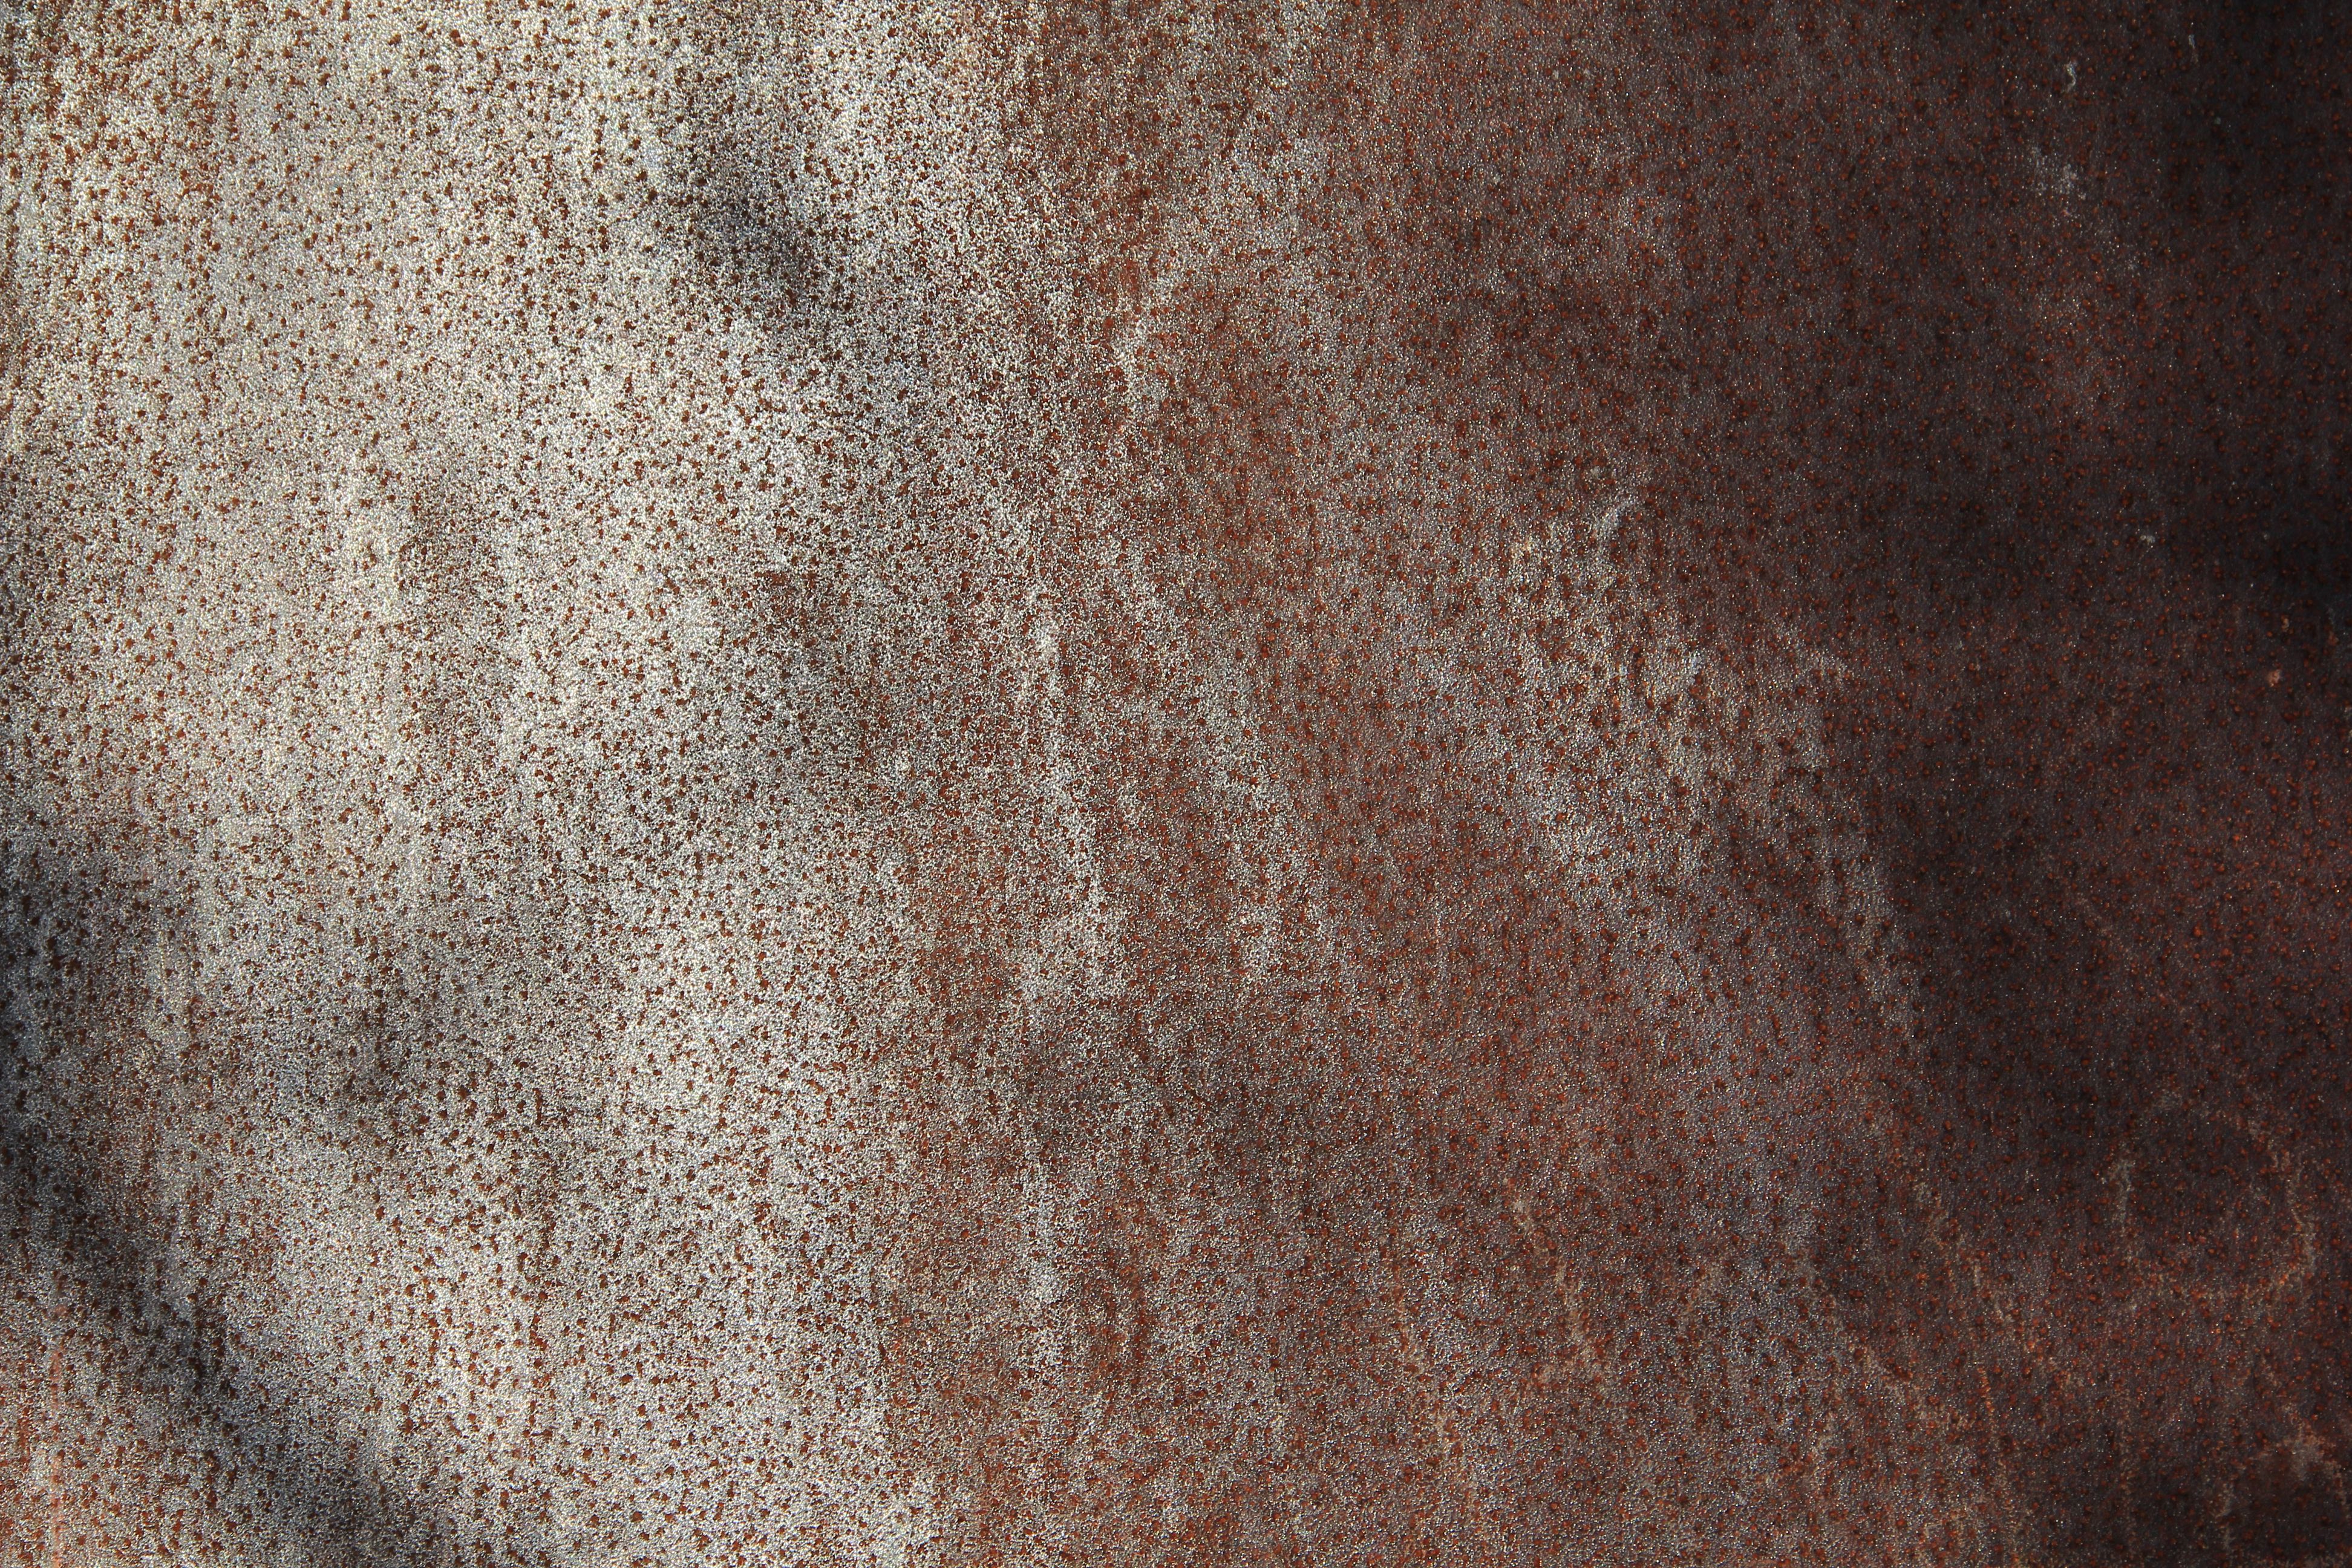 iron rust texture RCR | material | Pinterest | Iron rust